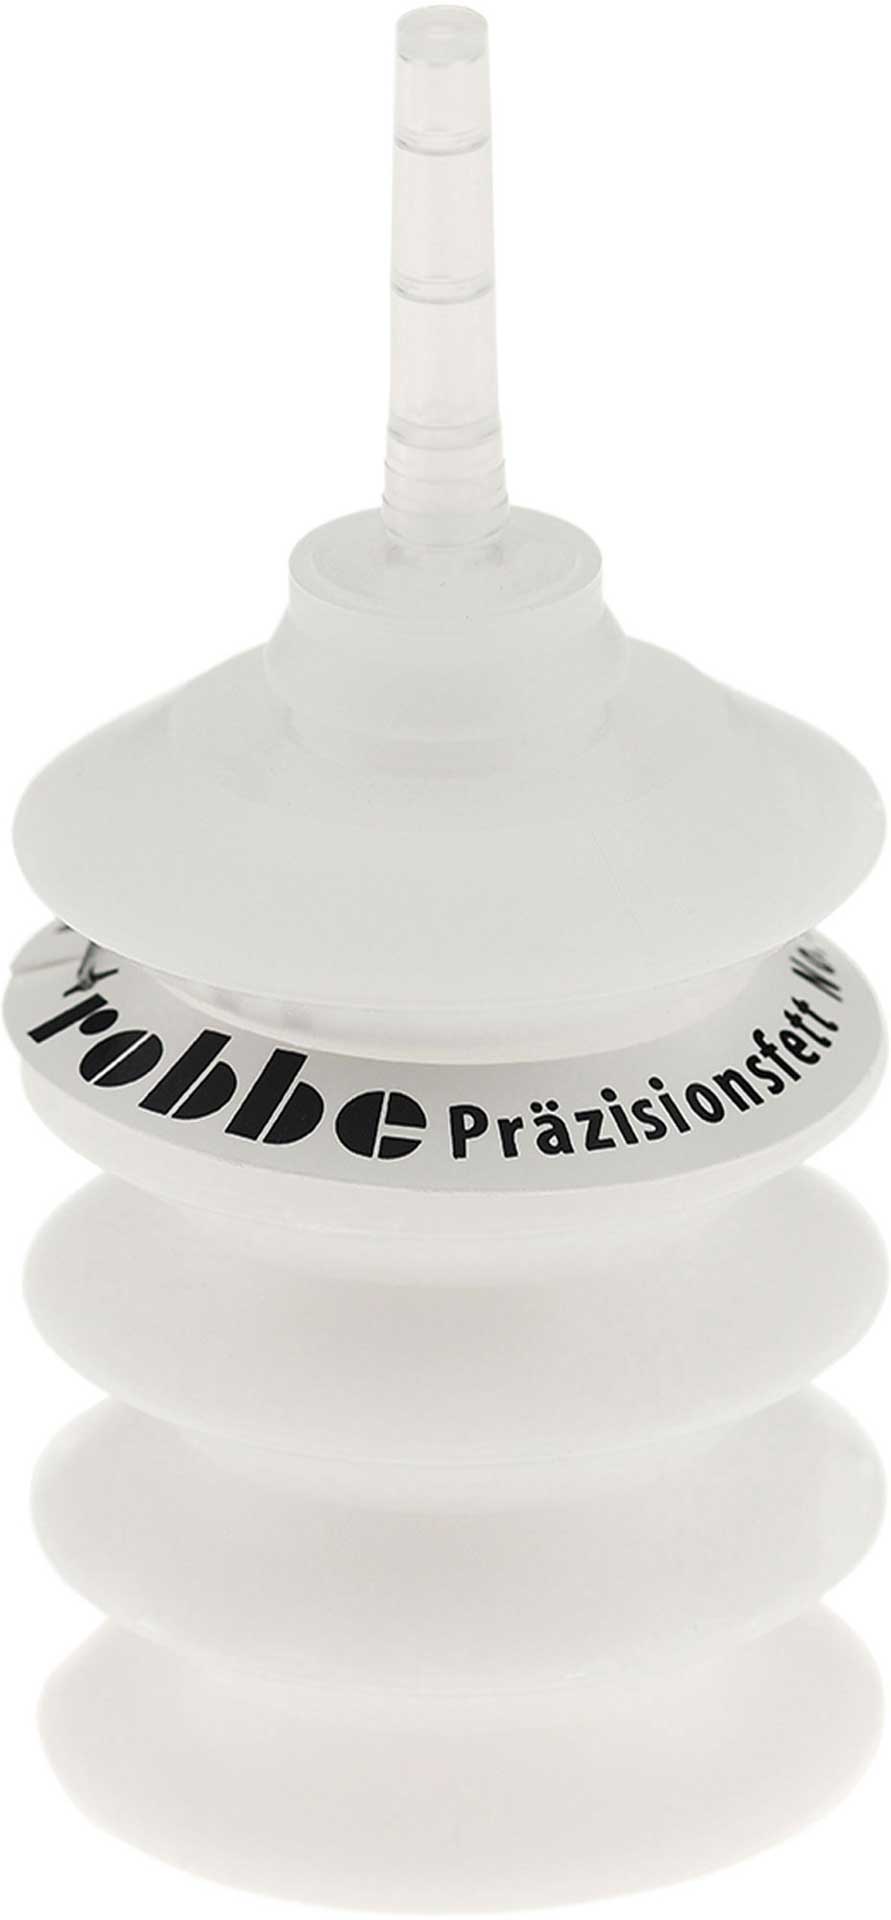 Robbe Modellsport Teflon grease 25g ( precision grease ) Original - Product!